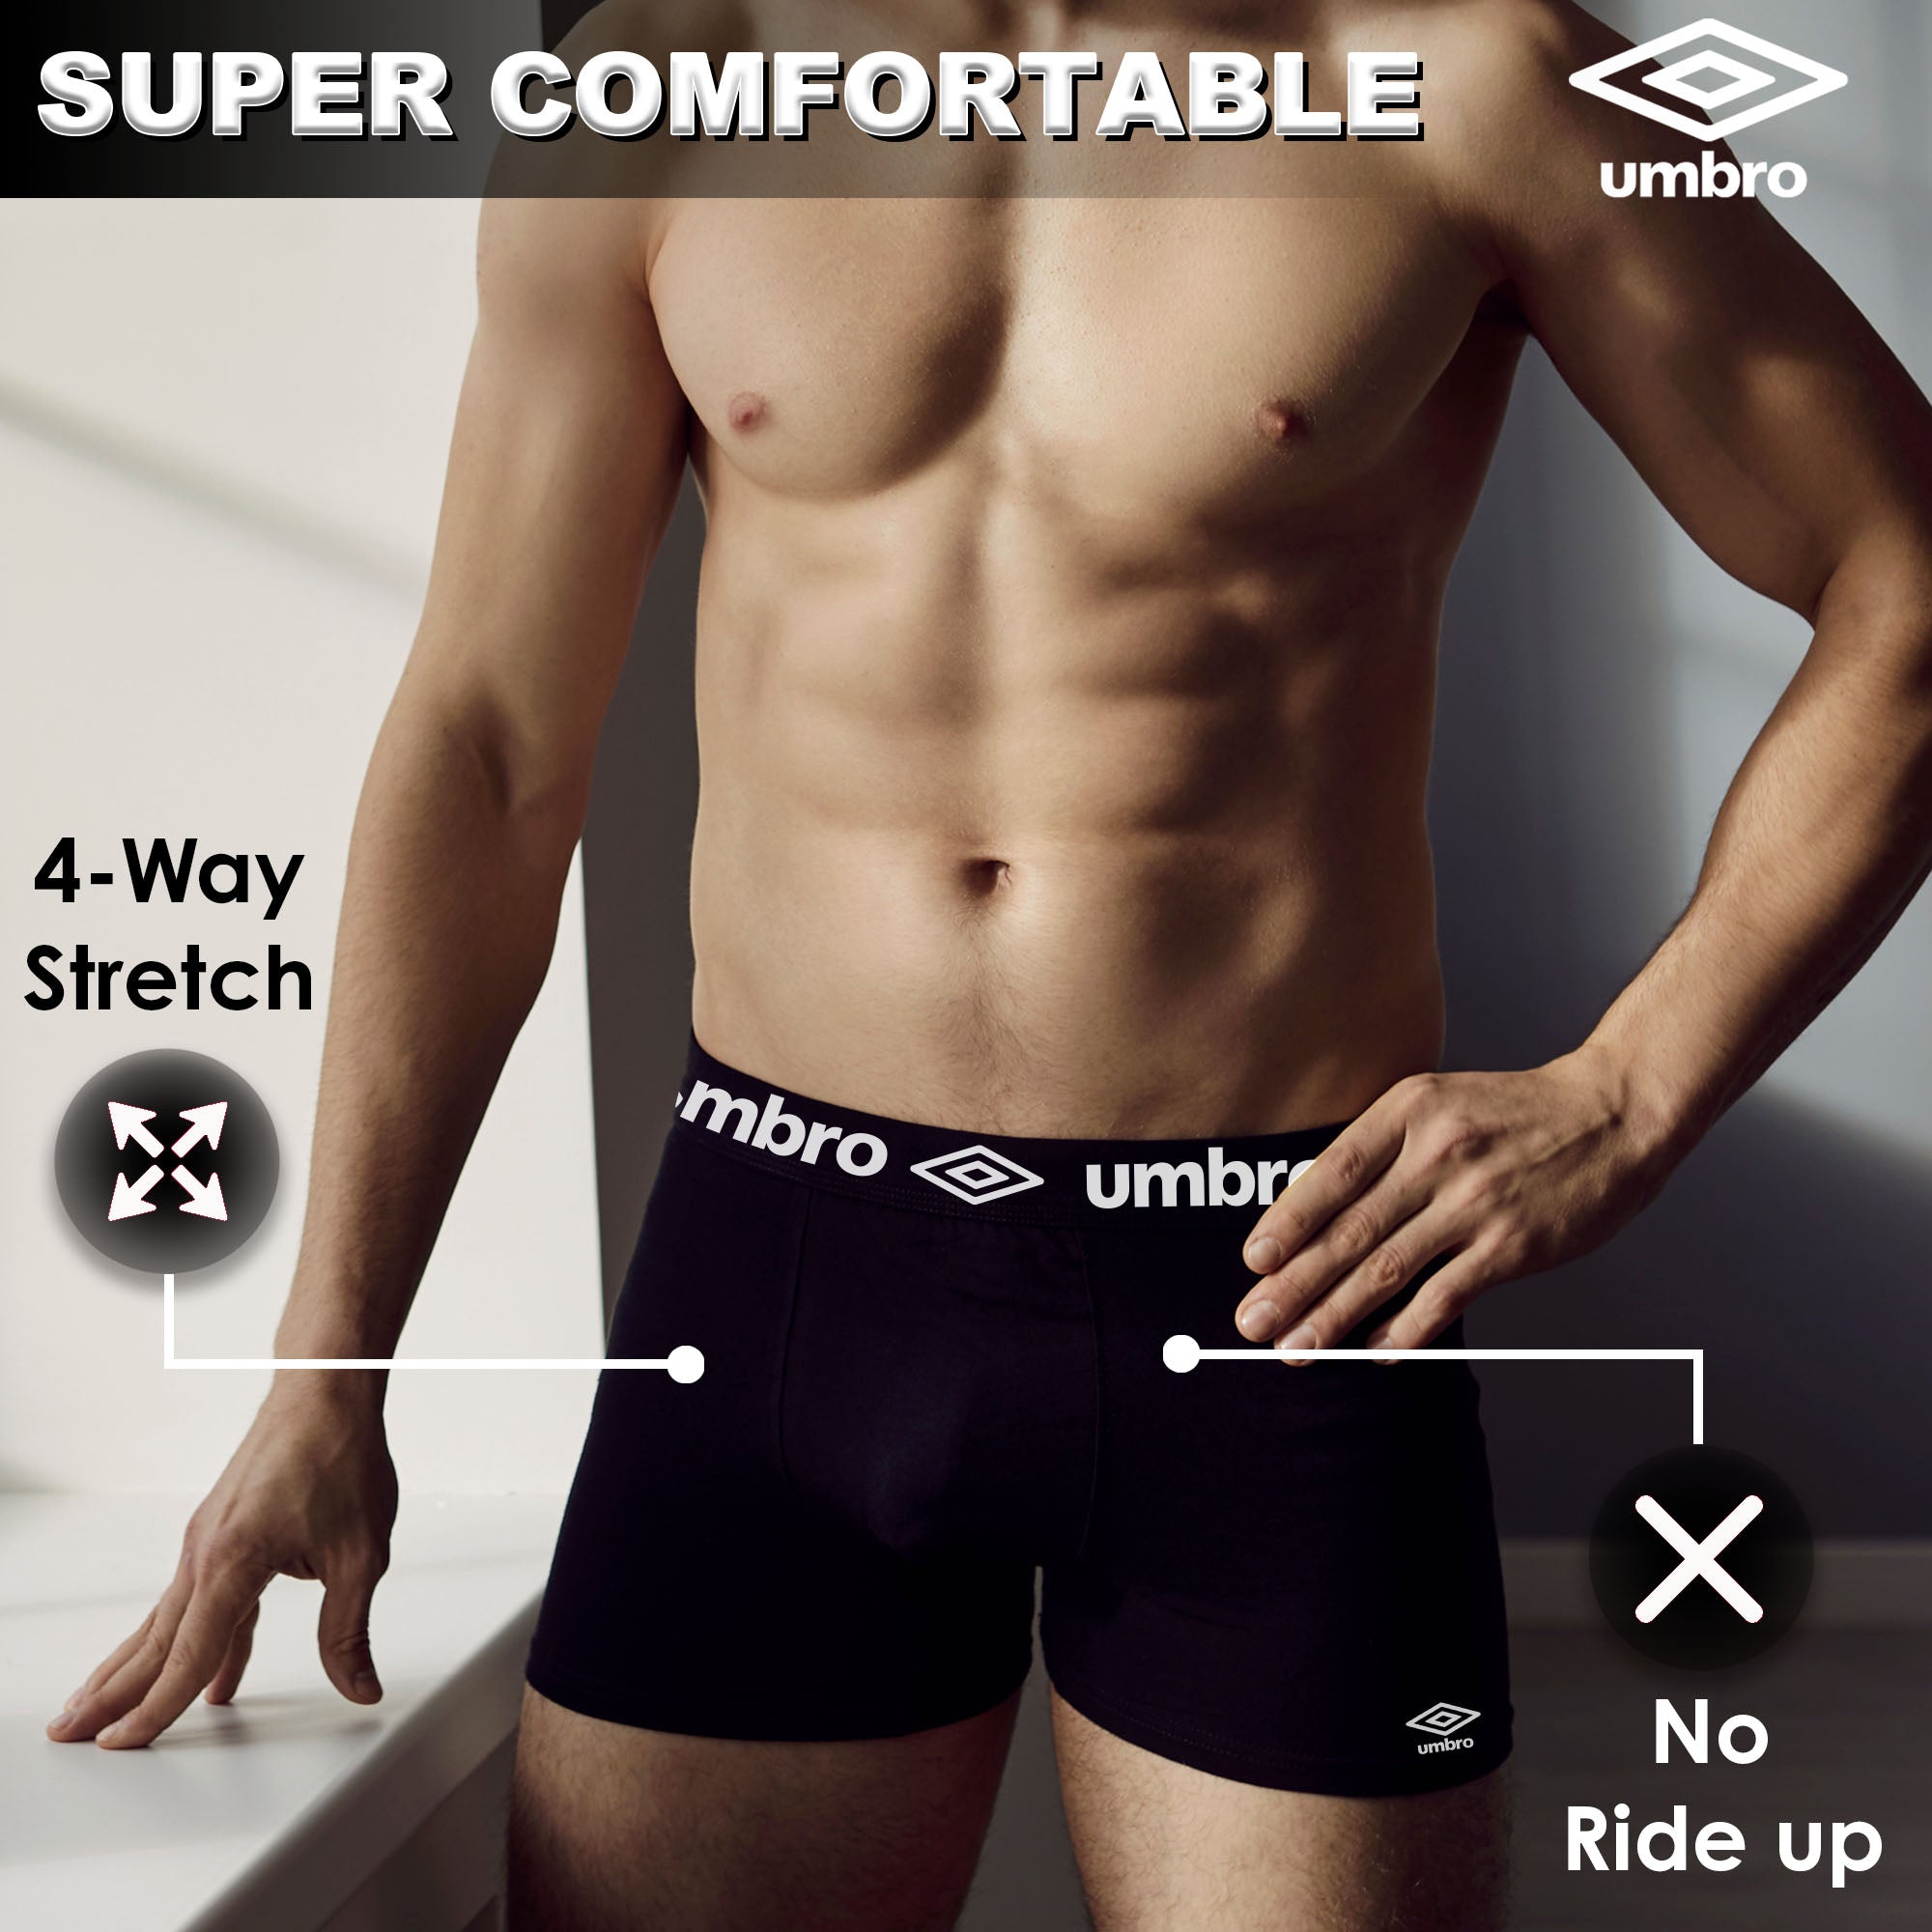 Umbro Performance Men’s Boxer Brief – 6 Pc Pack, Men’s Underwear Boxer Briefs, Soft & Comfortable Waistband, Anti-Chafing